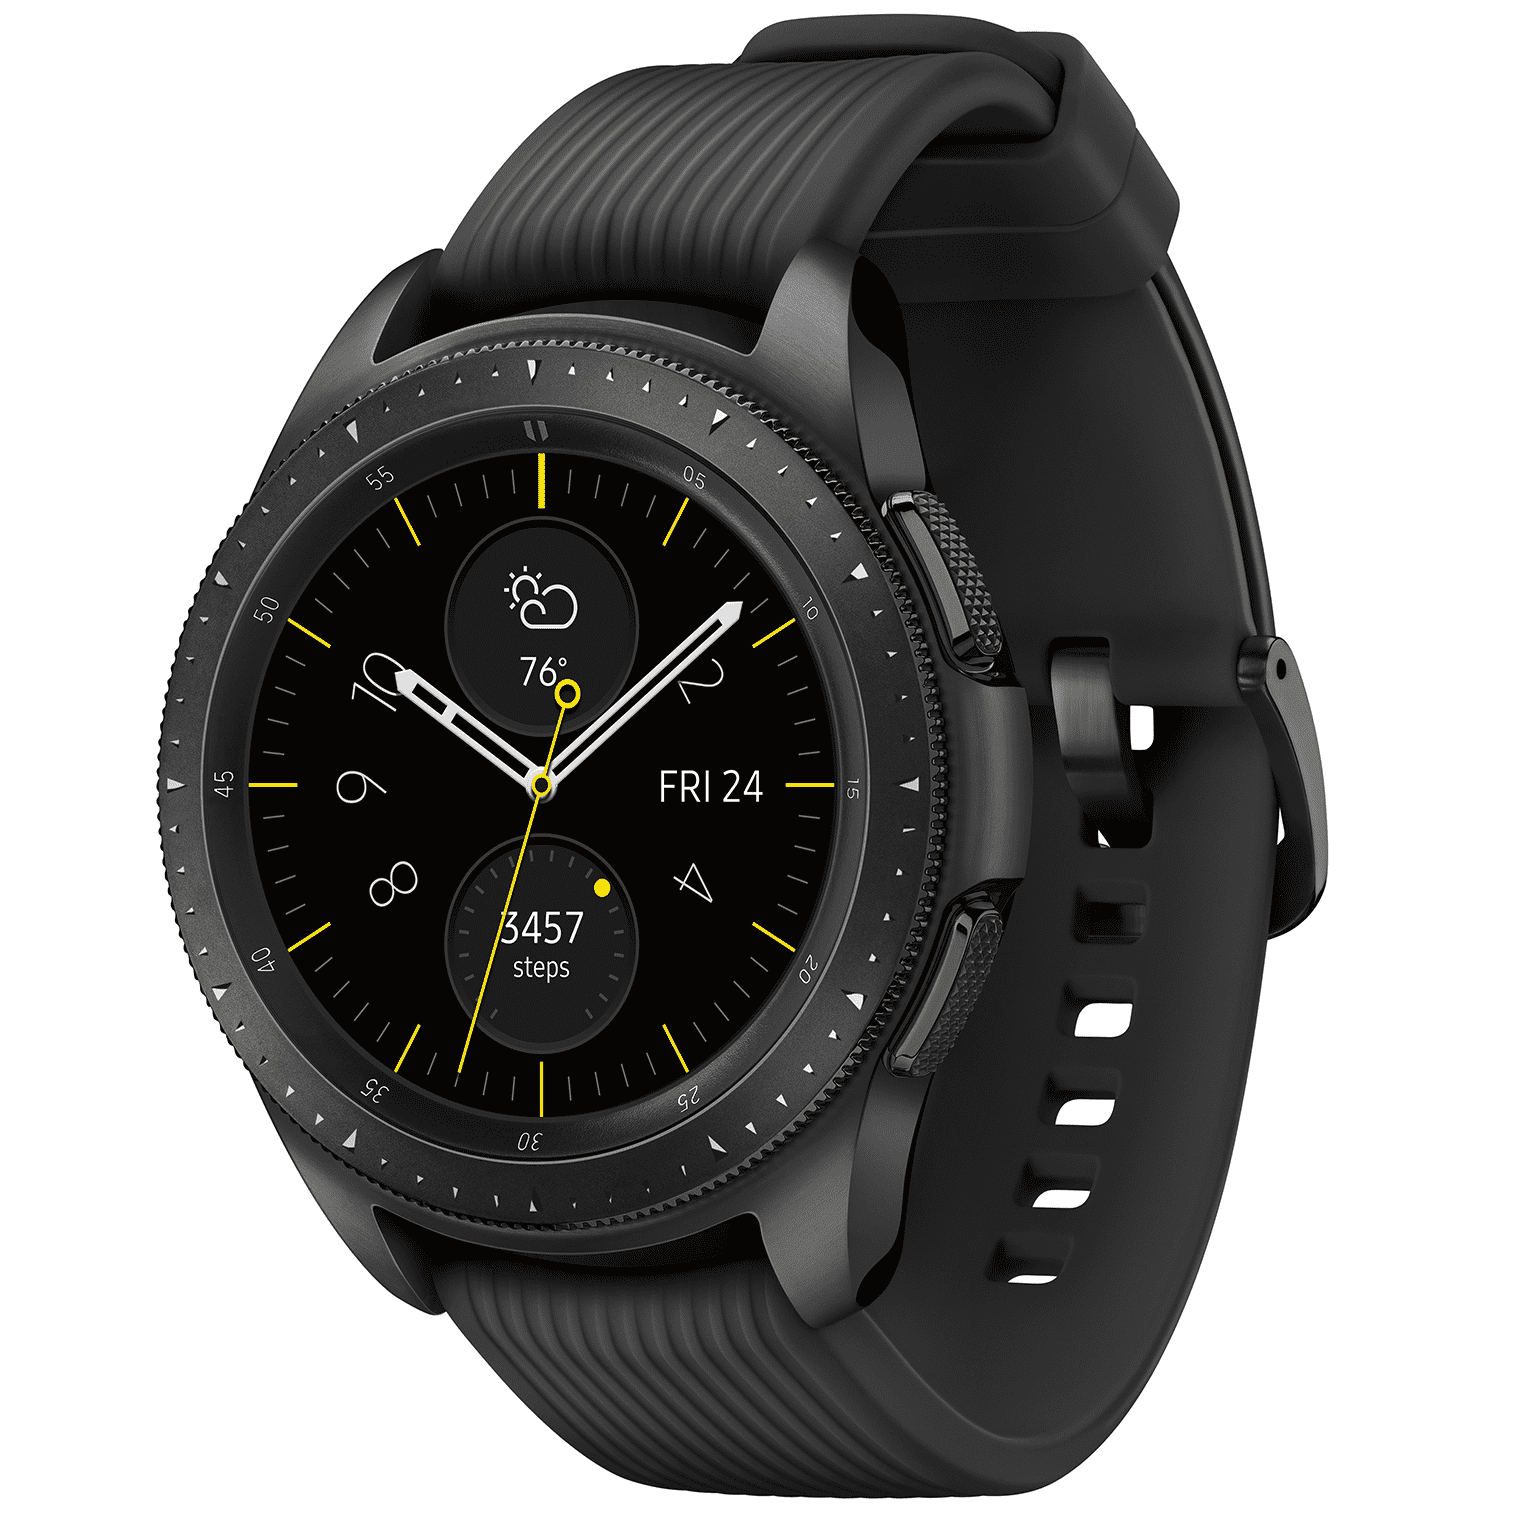 SAMSUNG Galaxy Watch - Bluetooth Smart Watch (42mm) - Midnight 